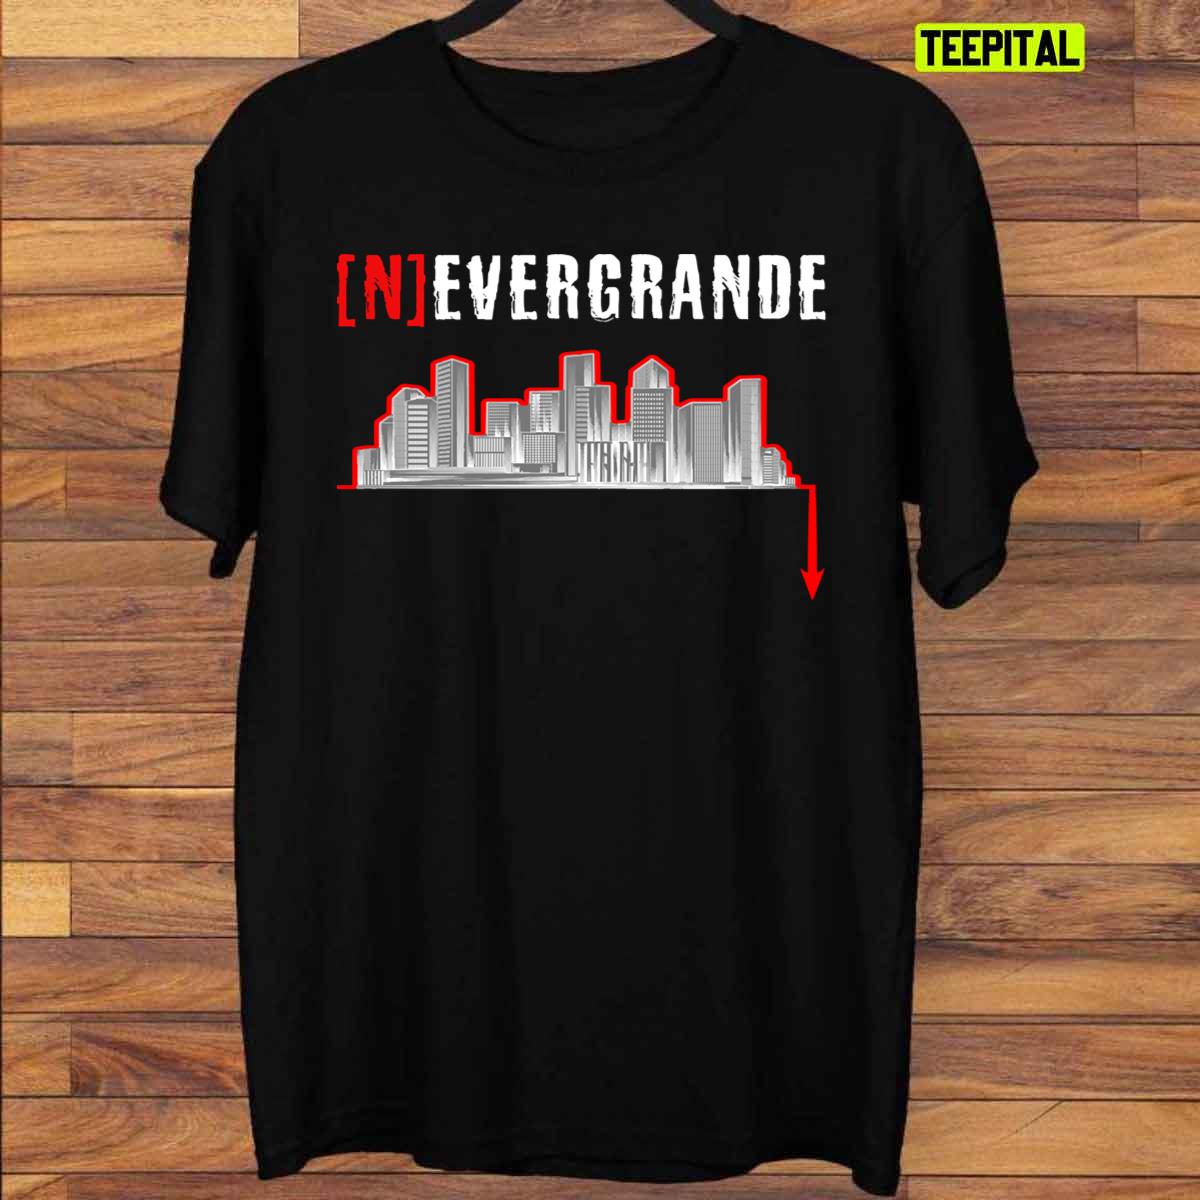 Evergrande Company T-Shirt